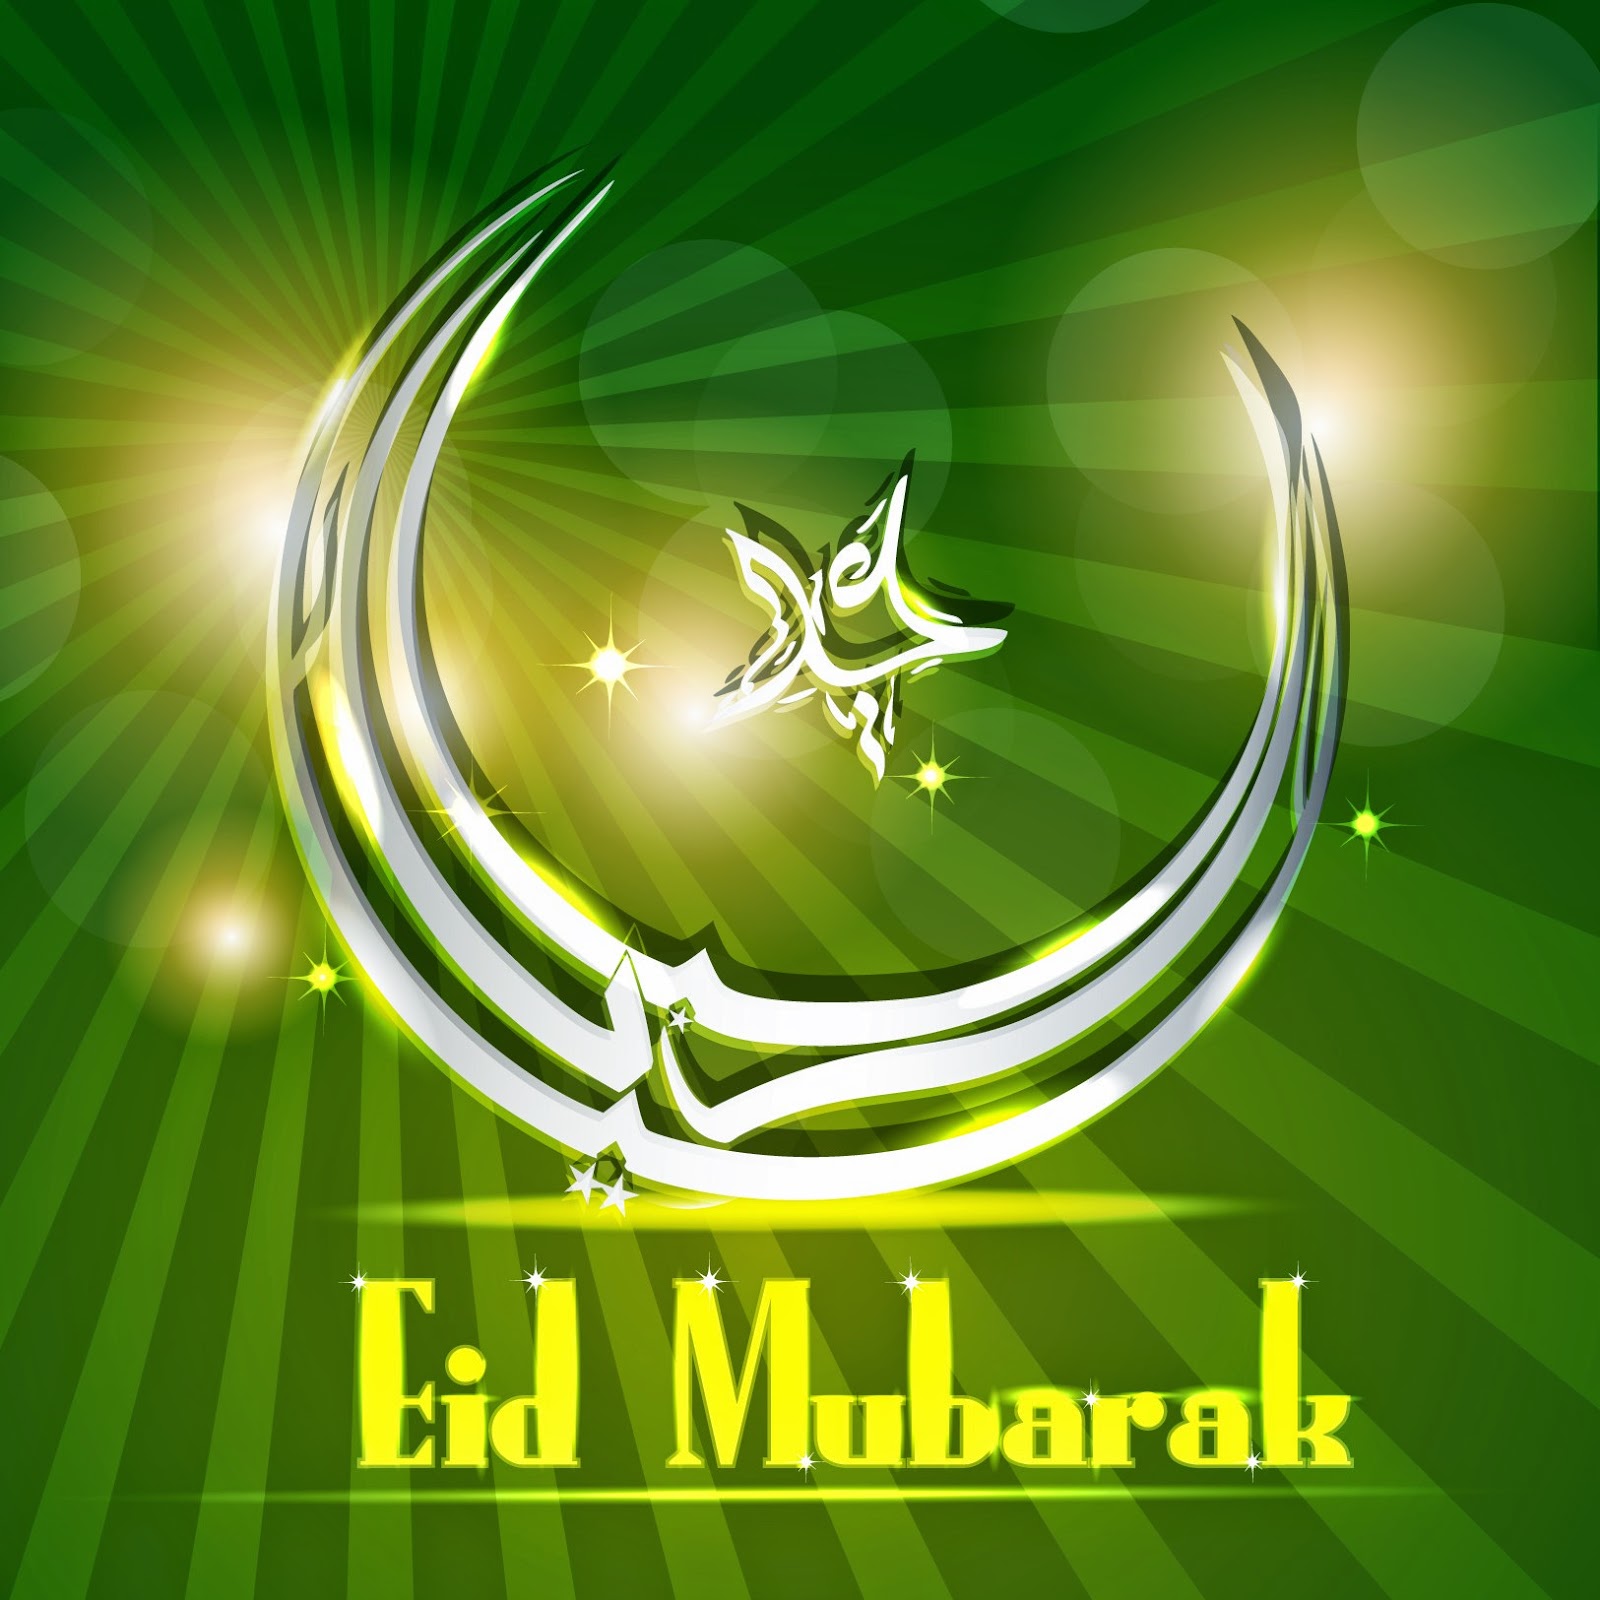 Http - //eidulfitrmubarak - Blogspot - Com/2014/07/e#mubarak - Today's Special Day For Muslim - HD Wallpaper 